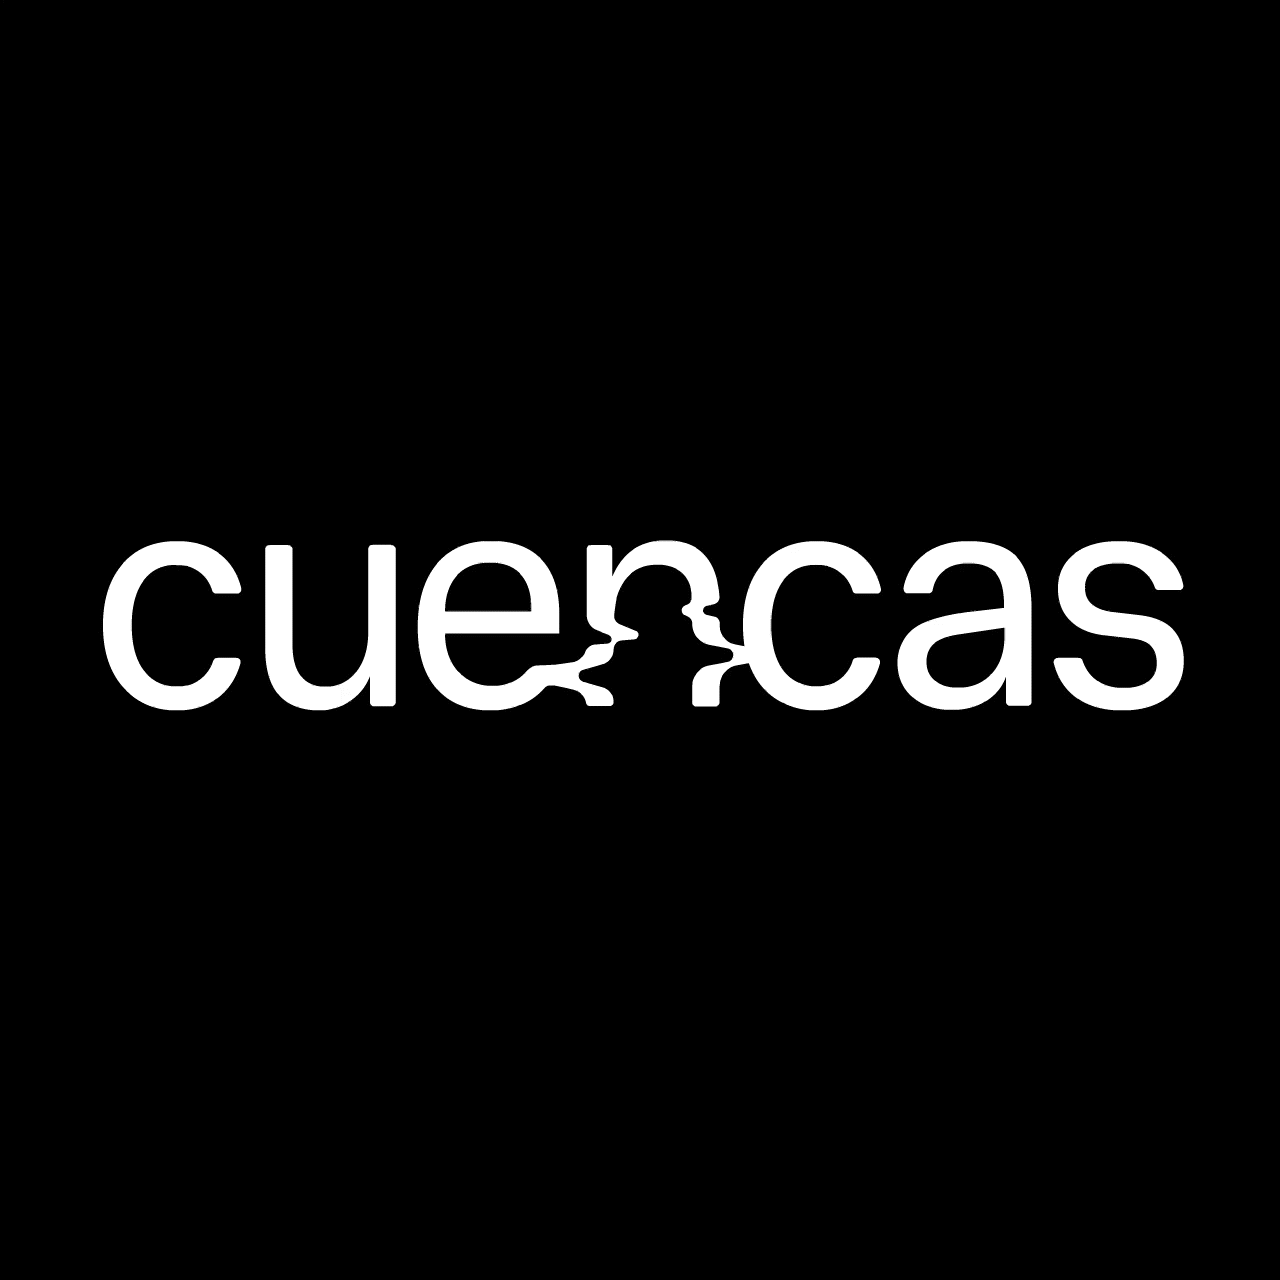 Cuencas_08B